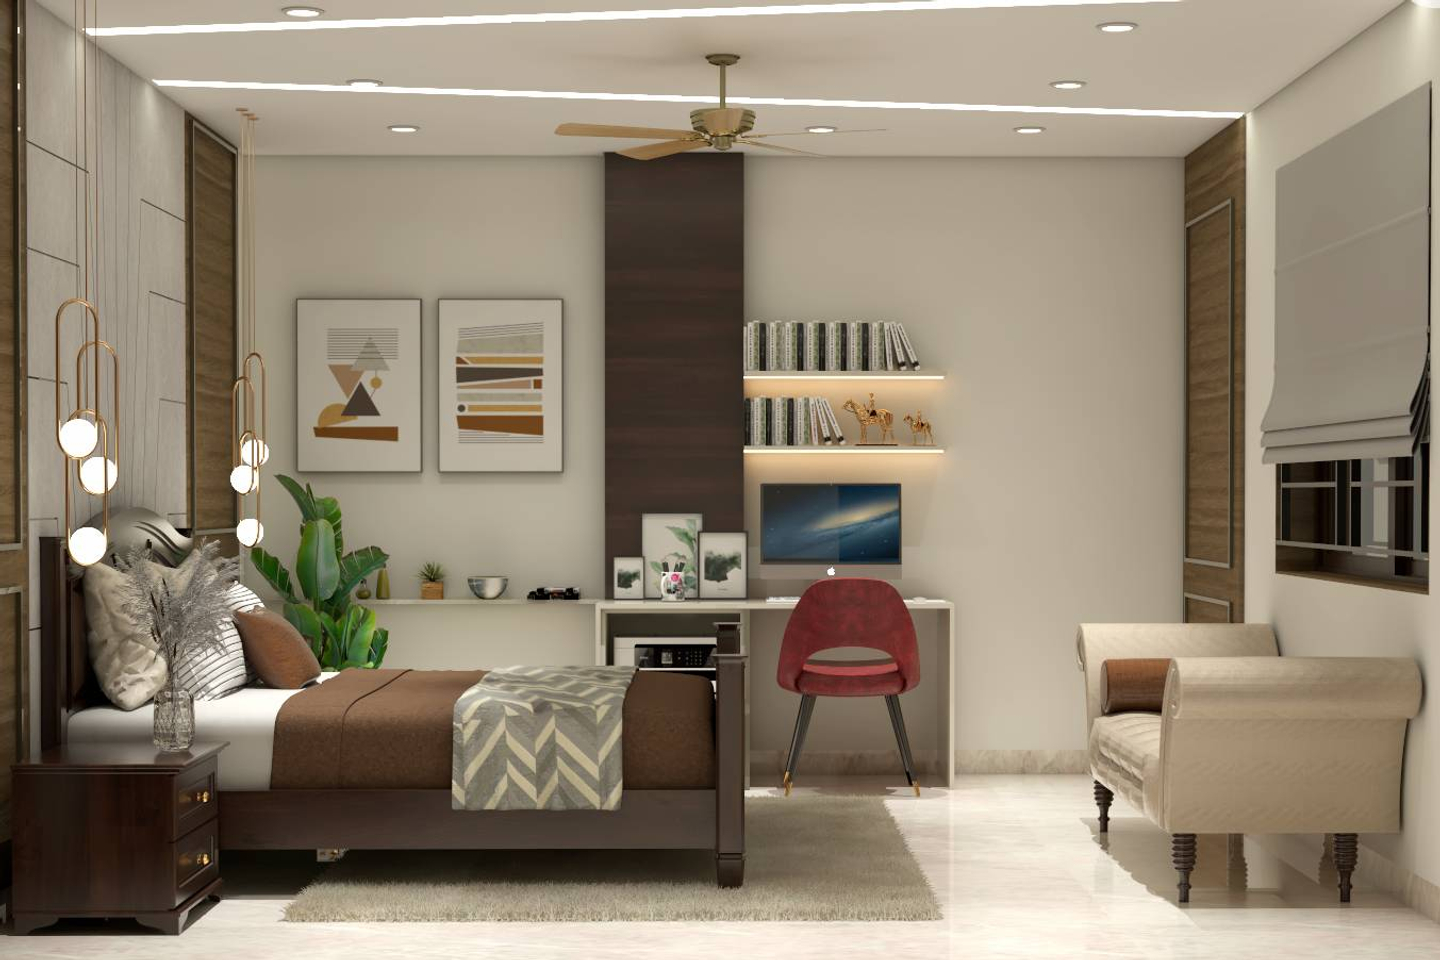 Contemporary Bedroom Design With Indoor Plants